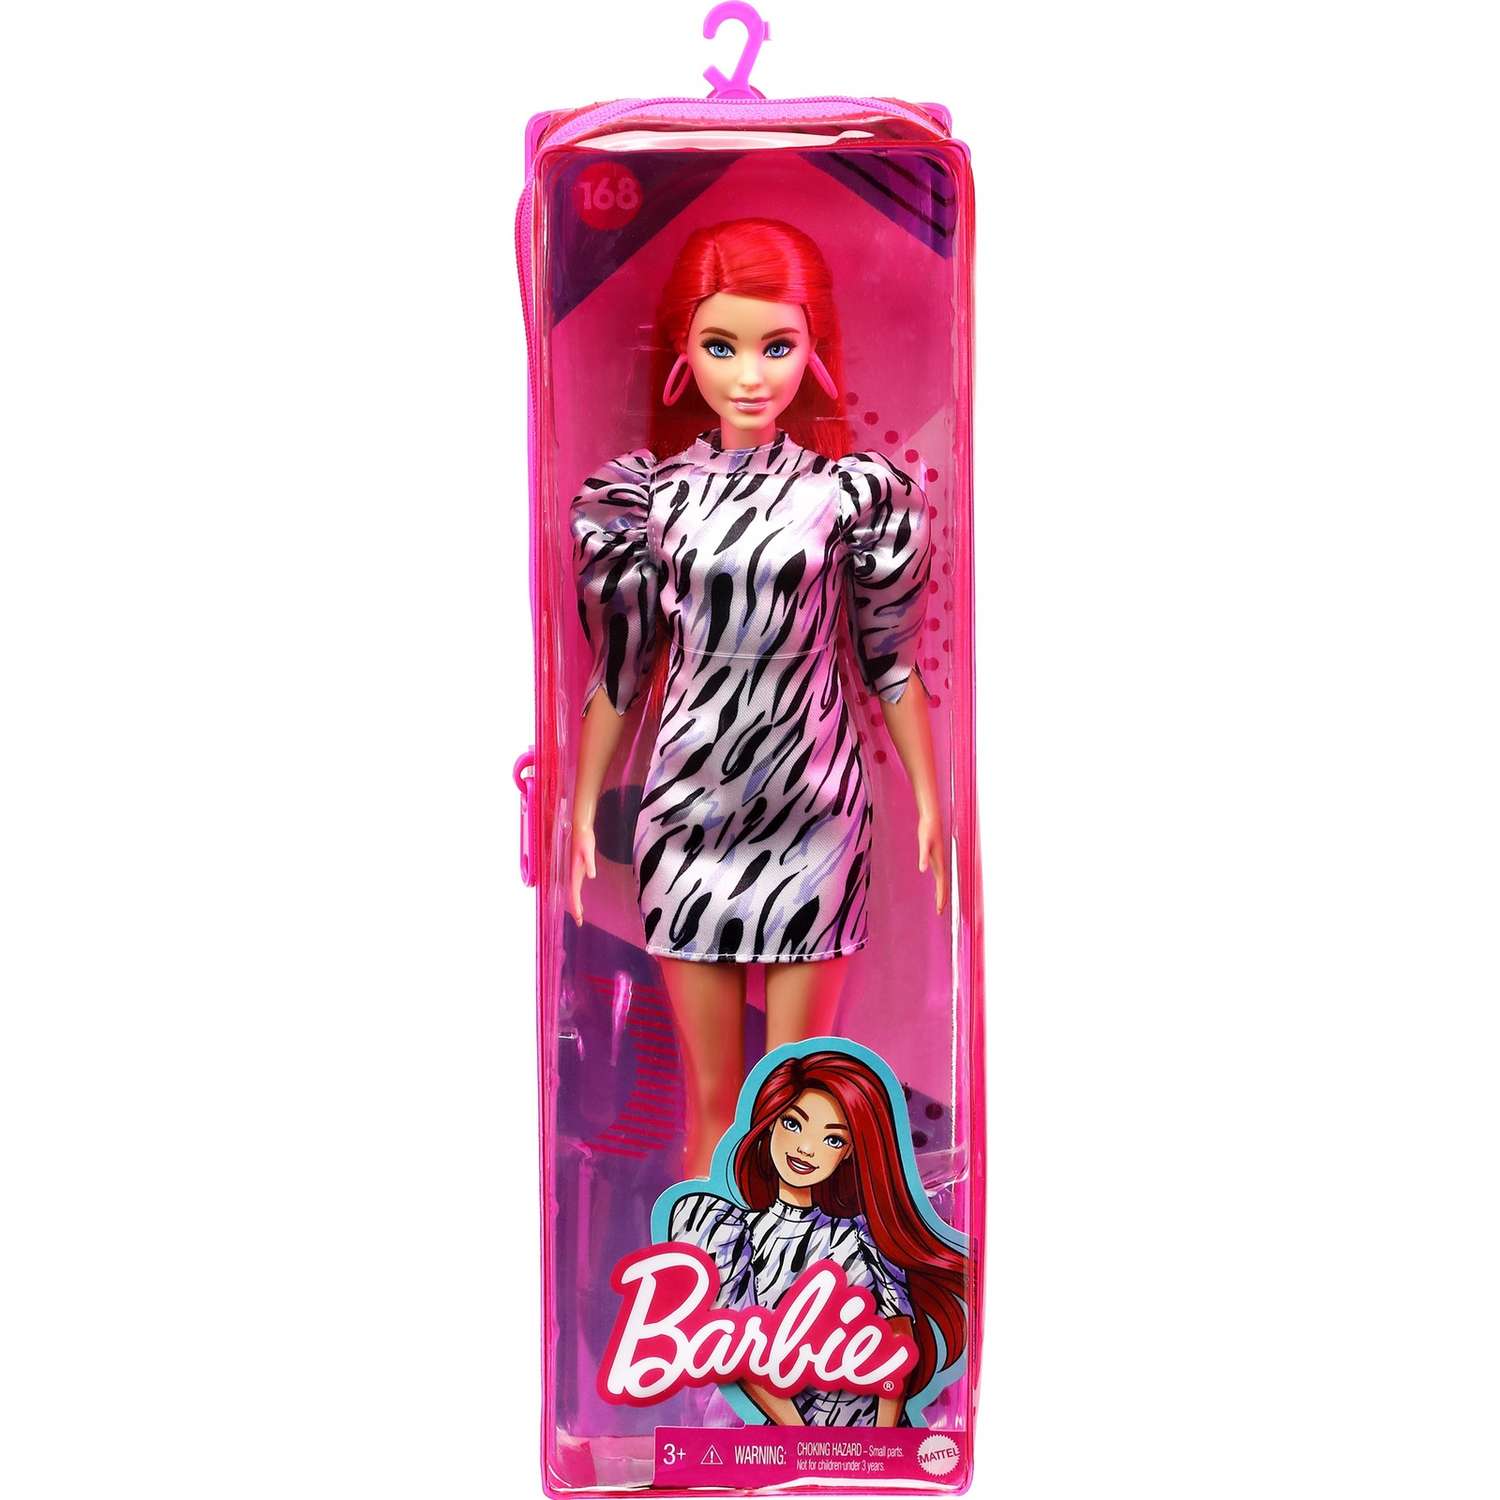 Кукла Barbie Игра с модой 168 GRB56 FBR37 - фото 2